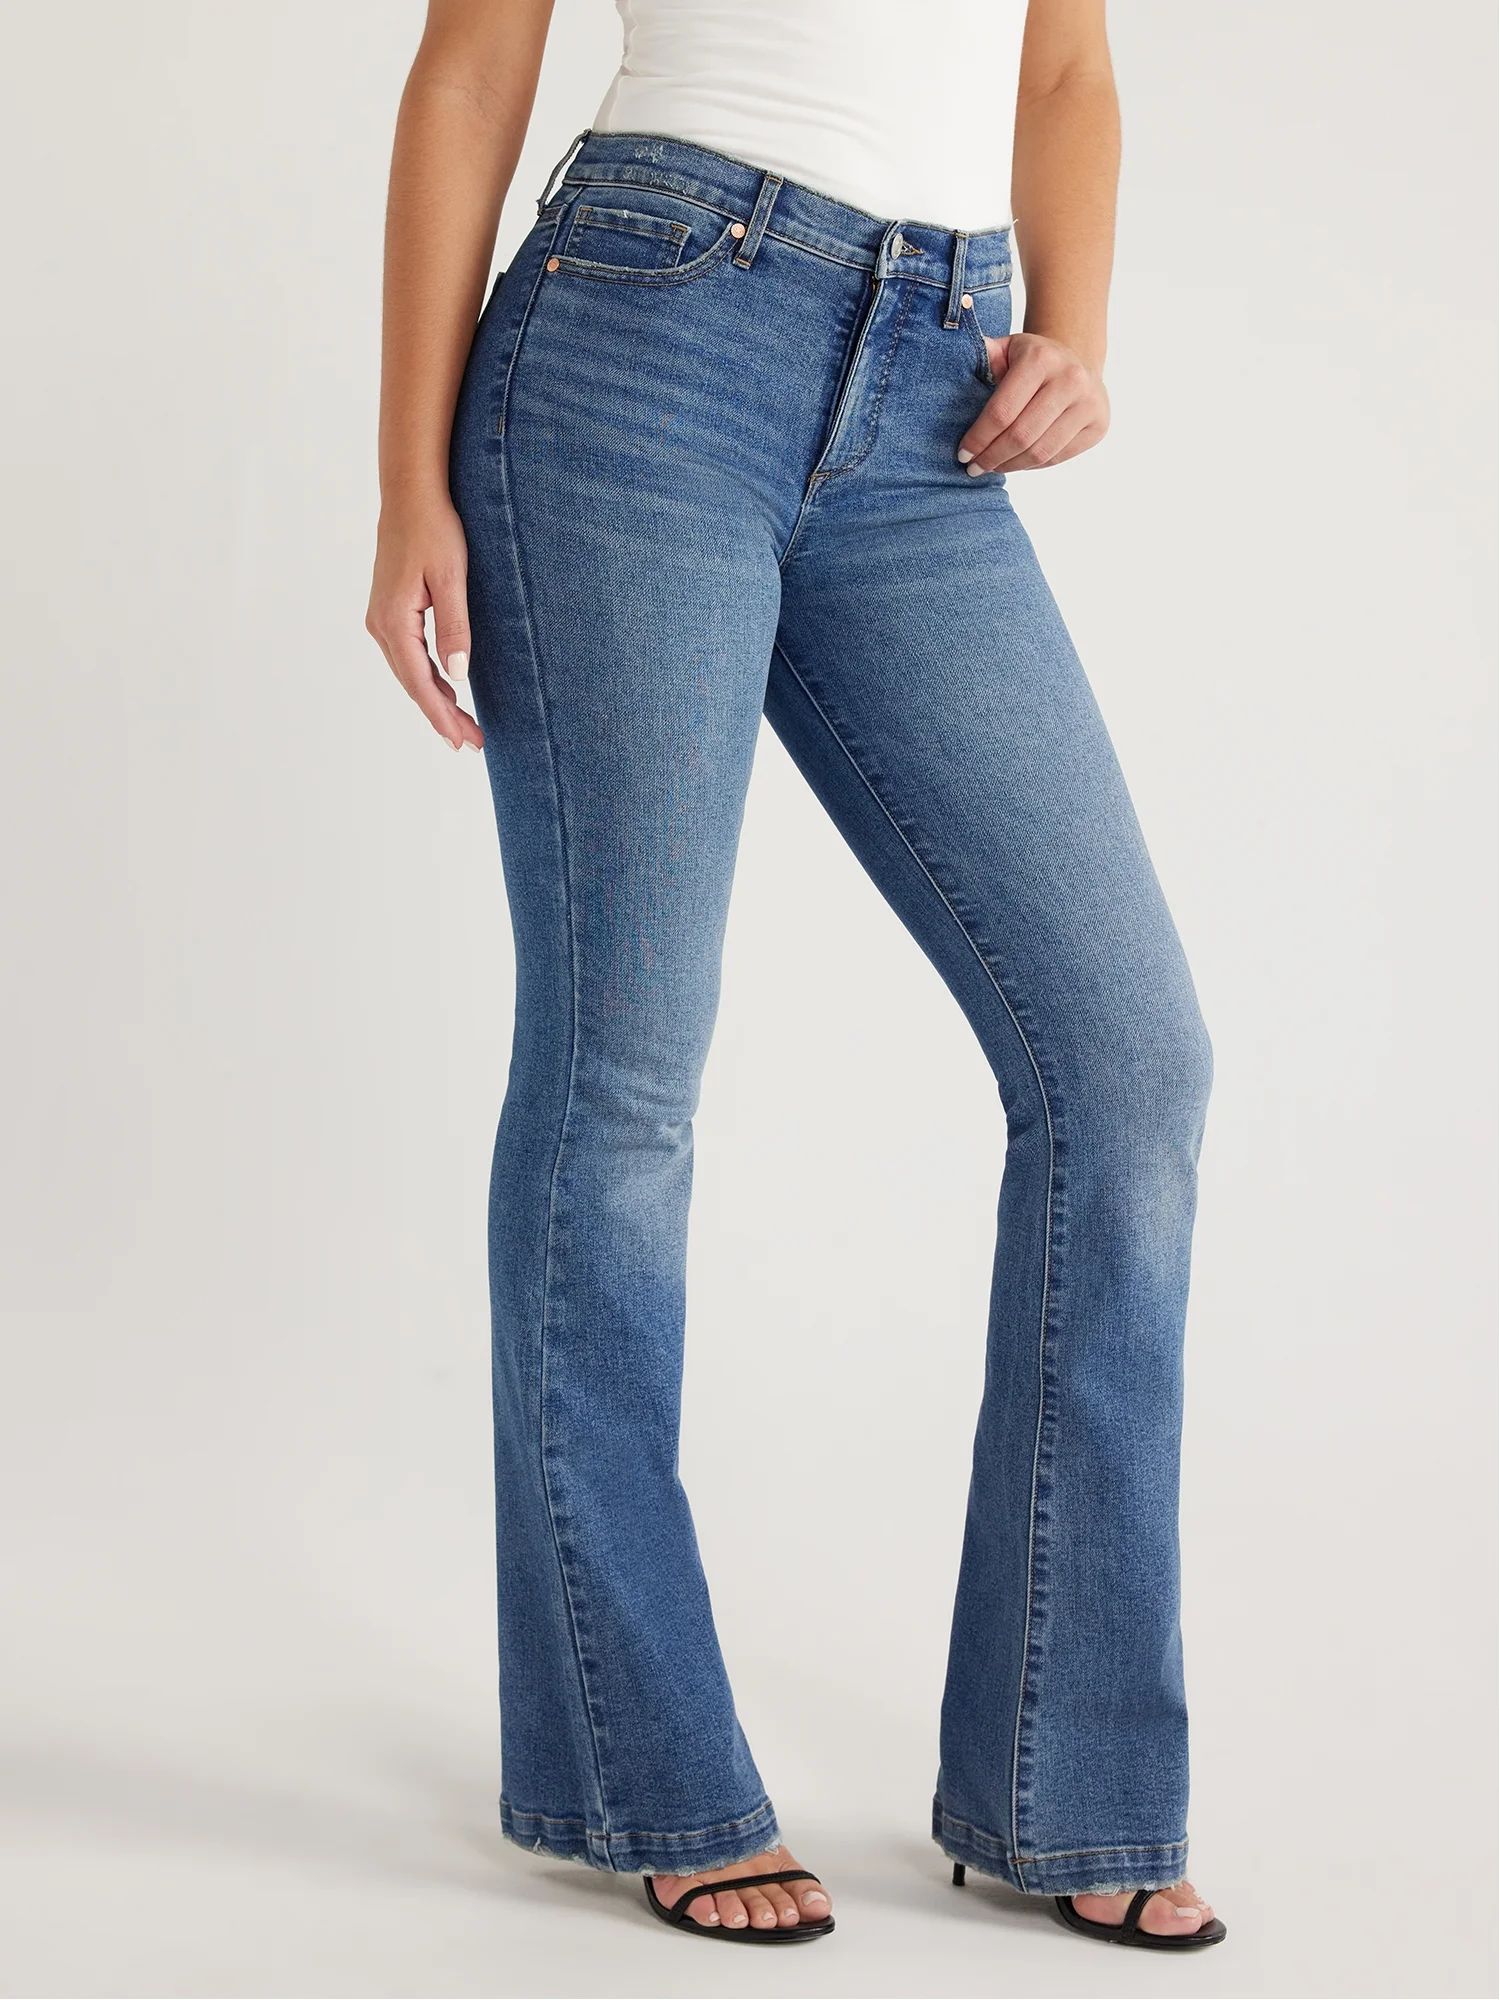 Sofia Jeans Women's Melissa Flare High Rise Jeans, 33.5" Inseam, Sizes 00-47 | Walmart (US)